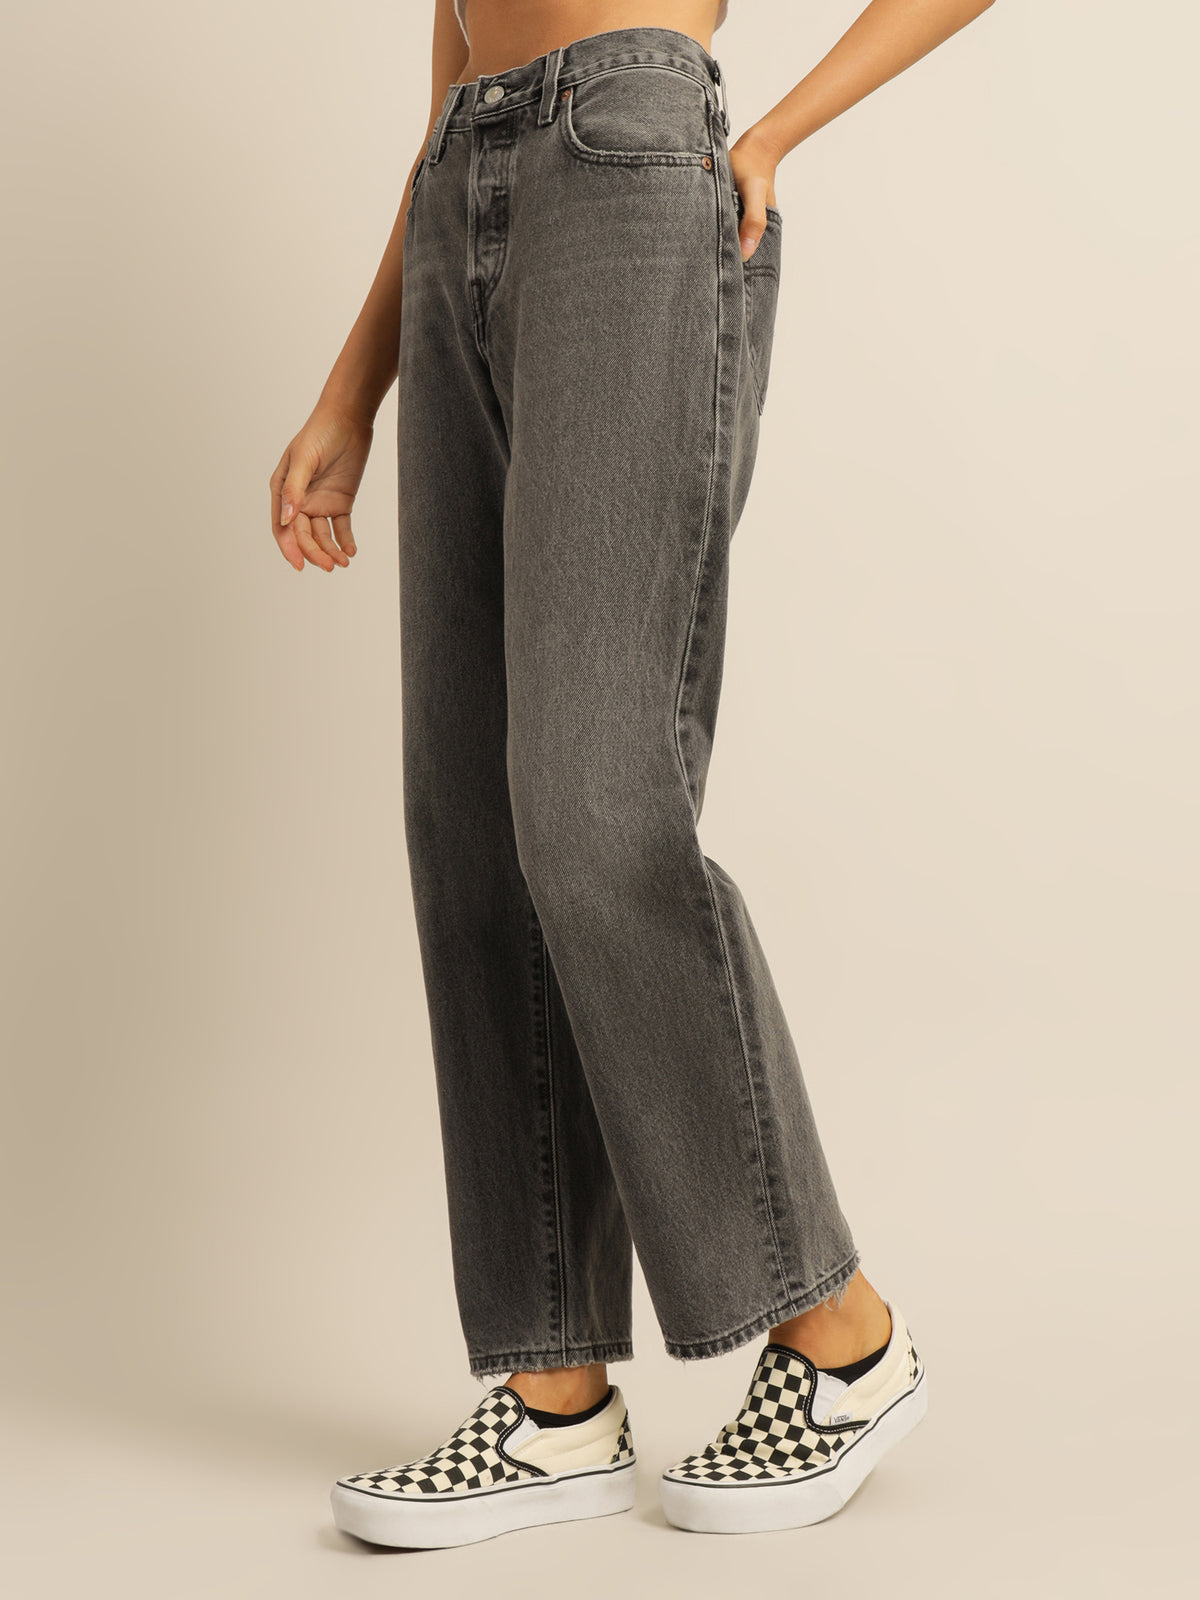 90s 501 Jeans in Fire Starter Black (30 length)